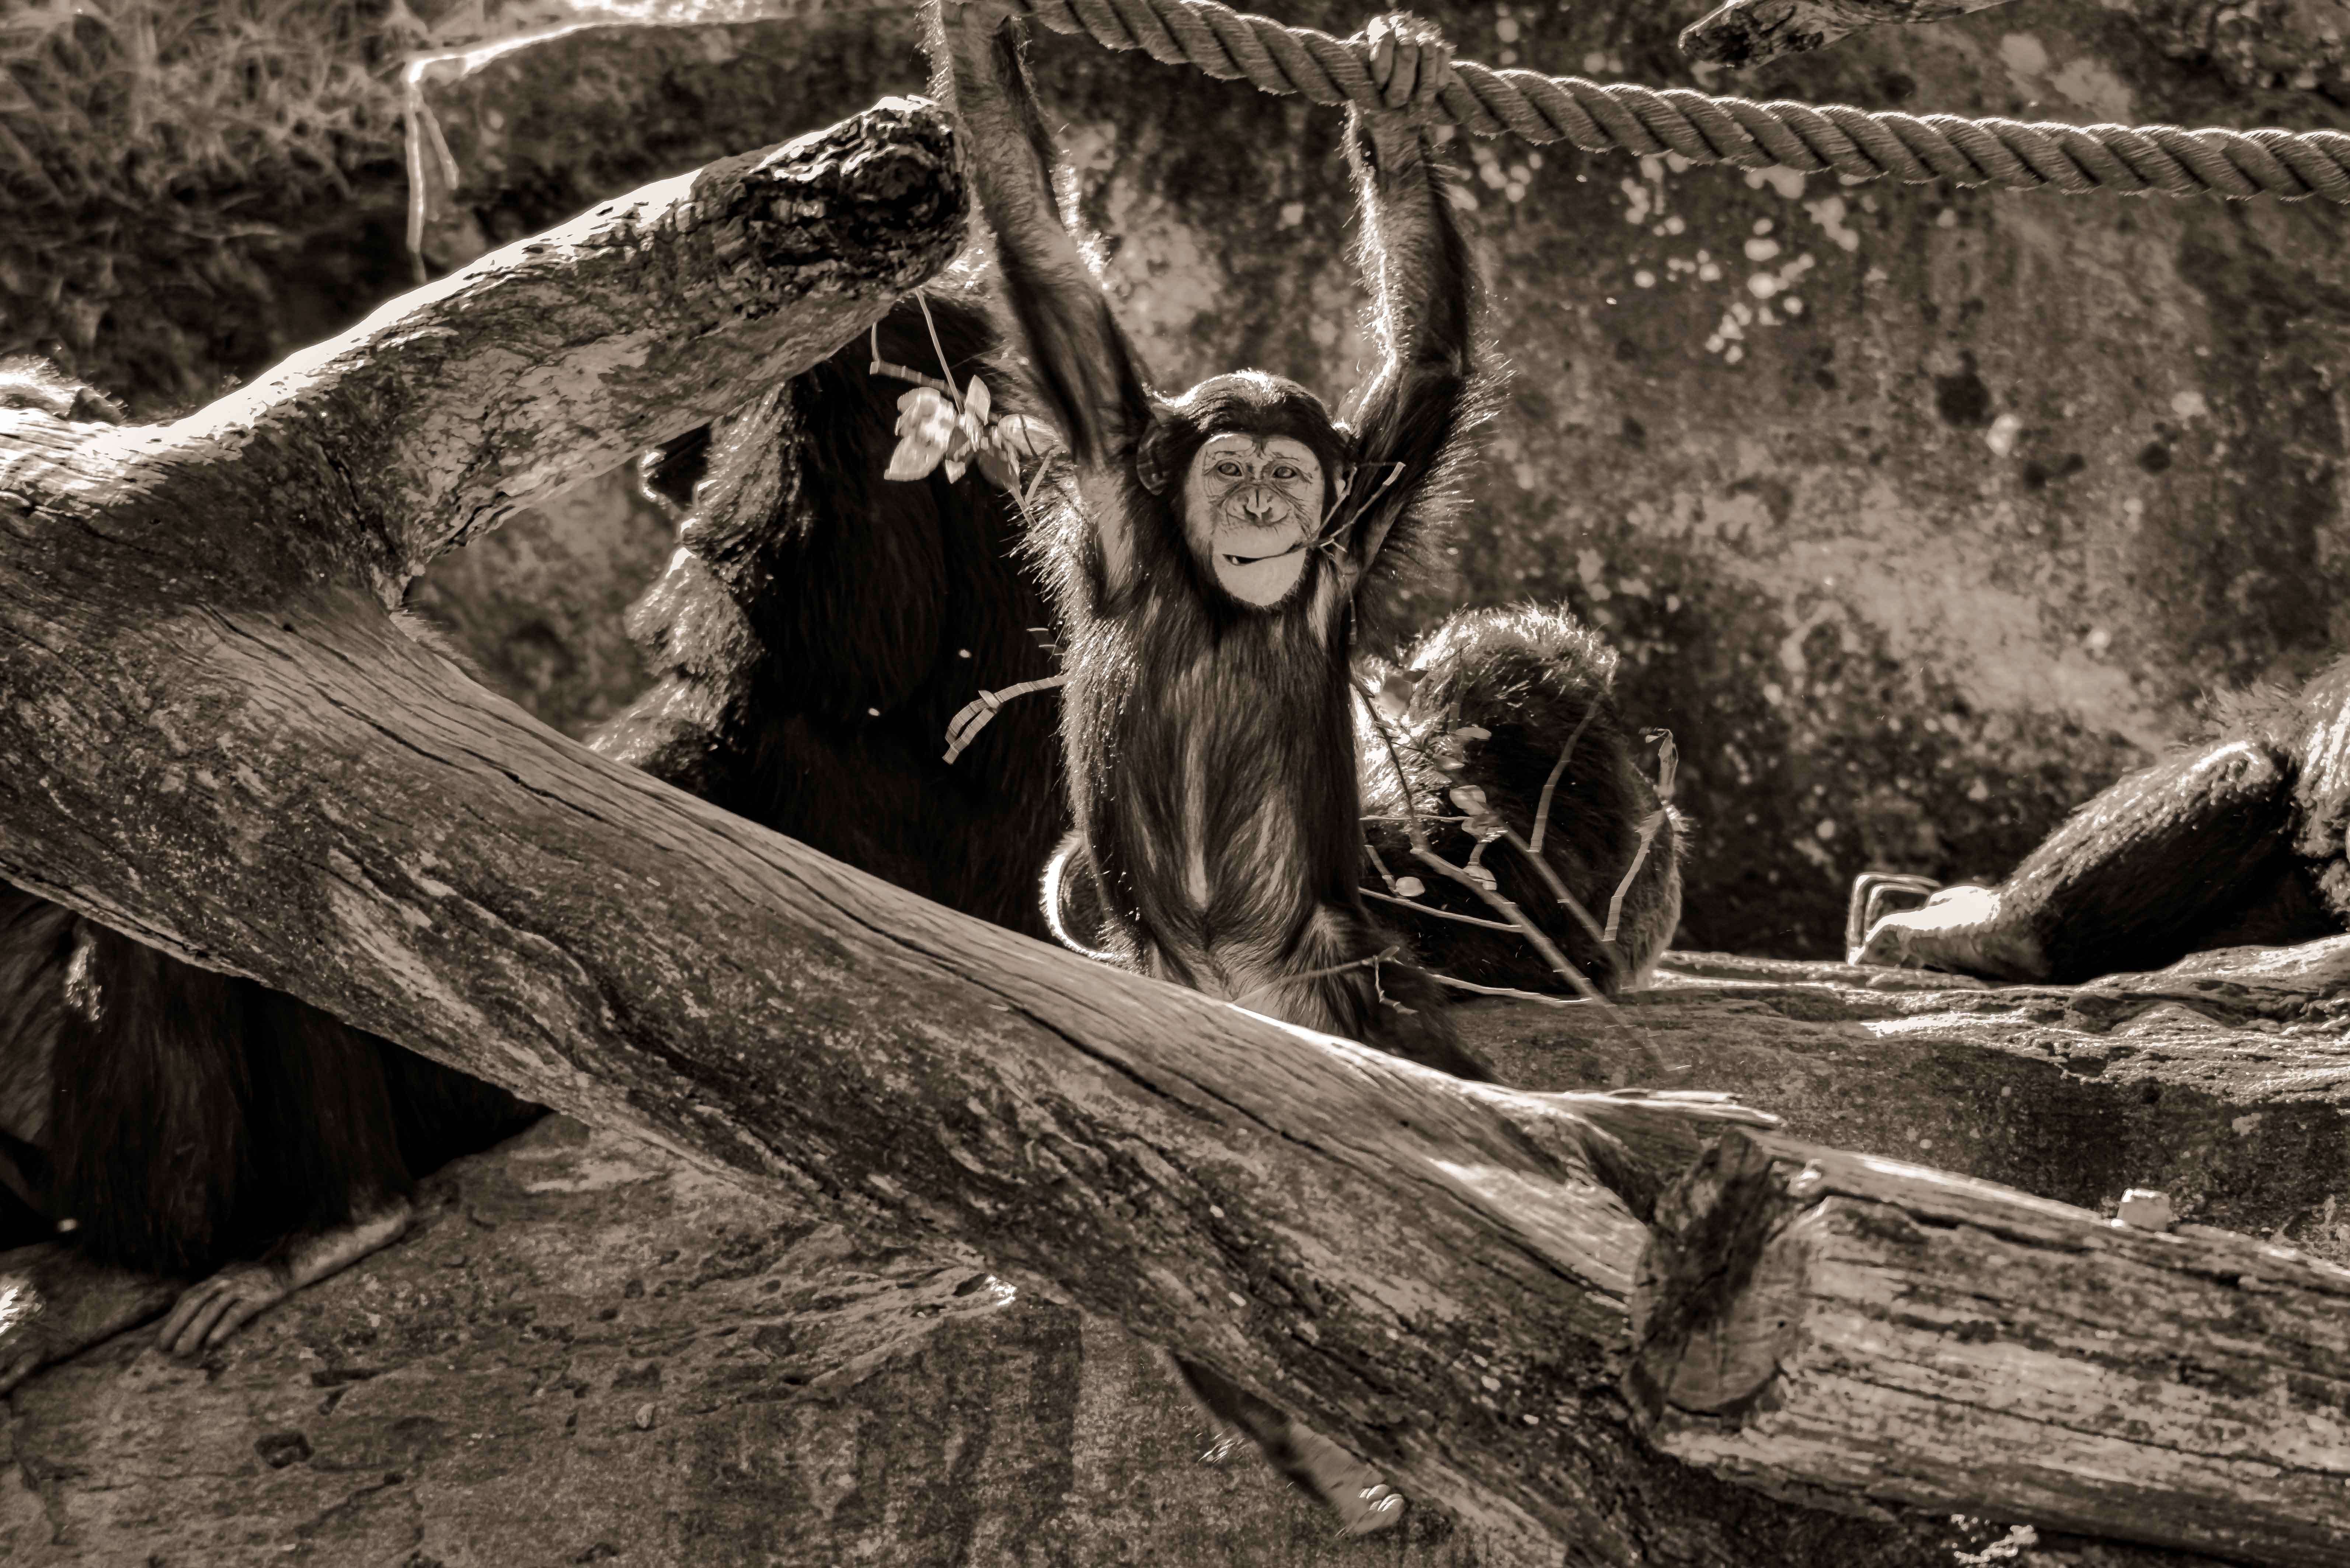 SEMD192 - DSC_7371 Sepia - 
Chimpanzee, Taronga Zoo,  Sydney, NSW, Australia.
1st July 2020 - 11.35am
Camera - Nikon D800 
F8 - ISO 400 - 1/100 second - Focal Length 270mm : Wildlife - Sepia : Stephen E-Moran - Fine Art Photography